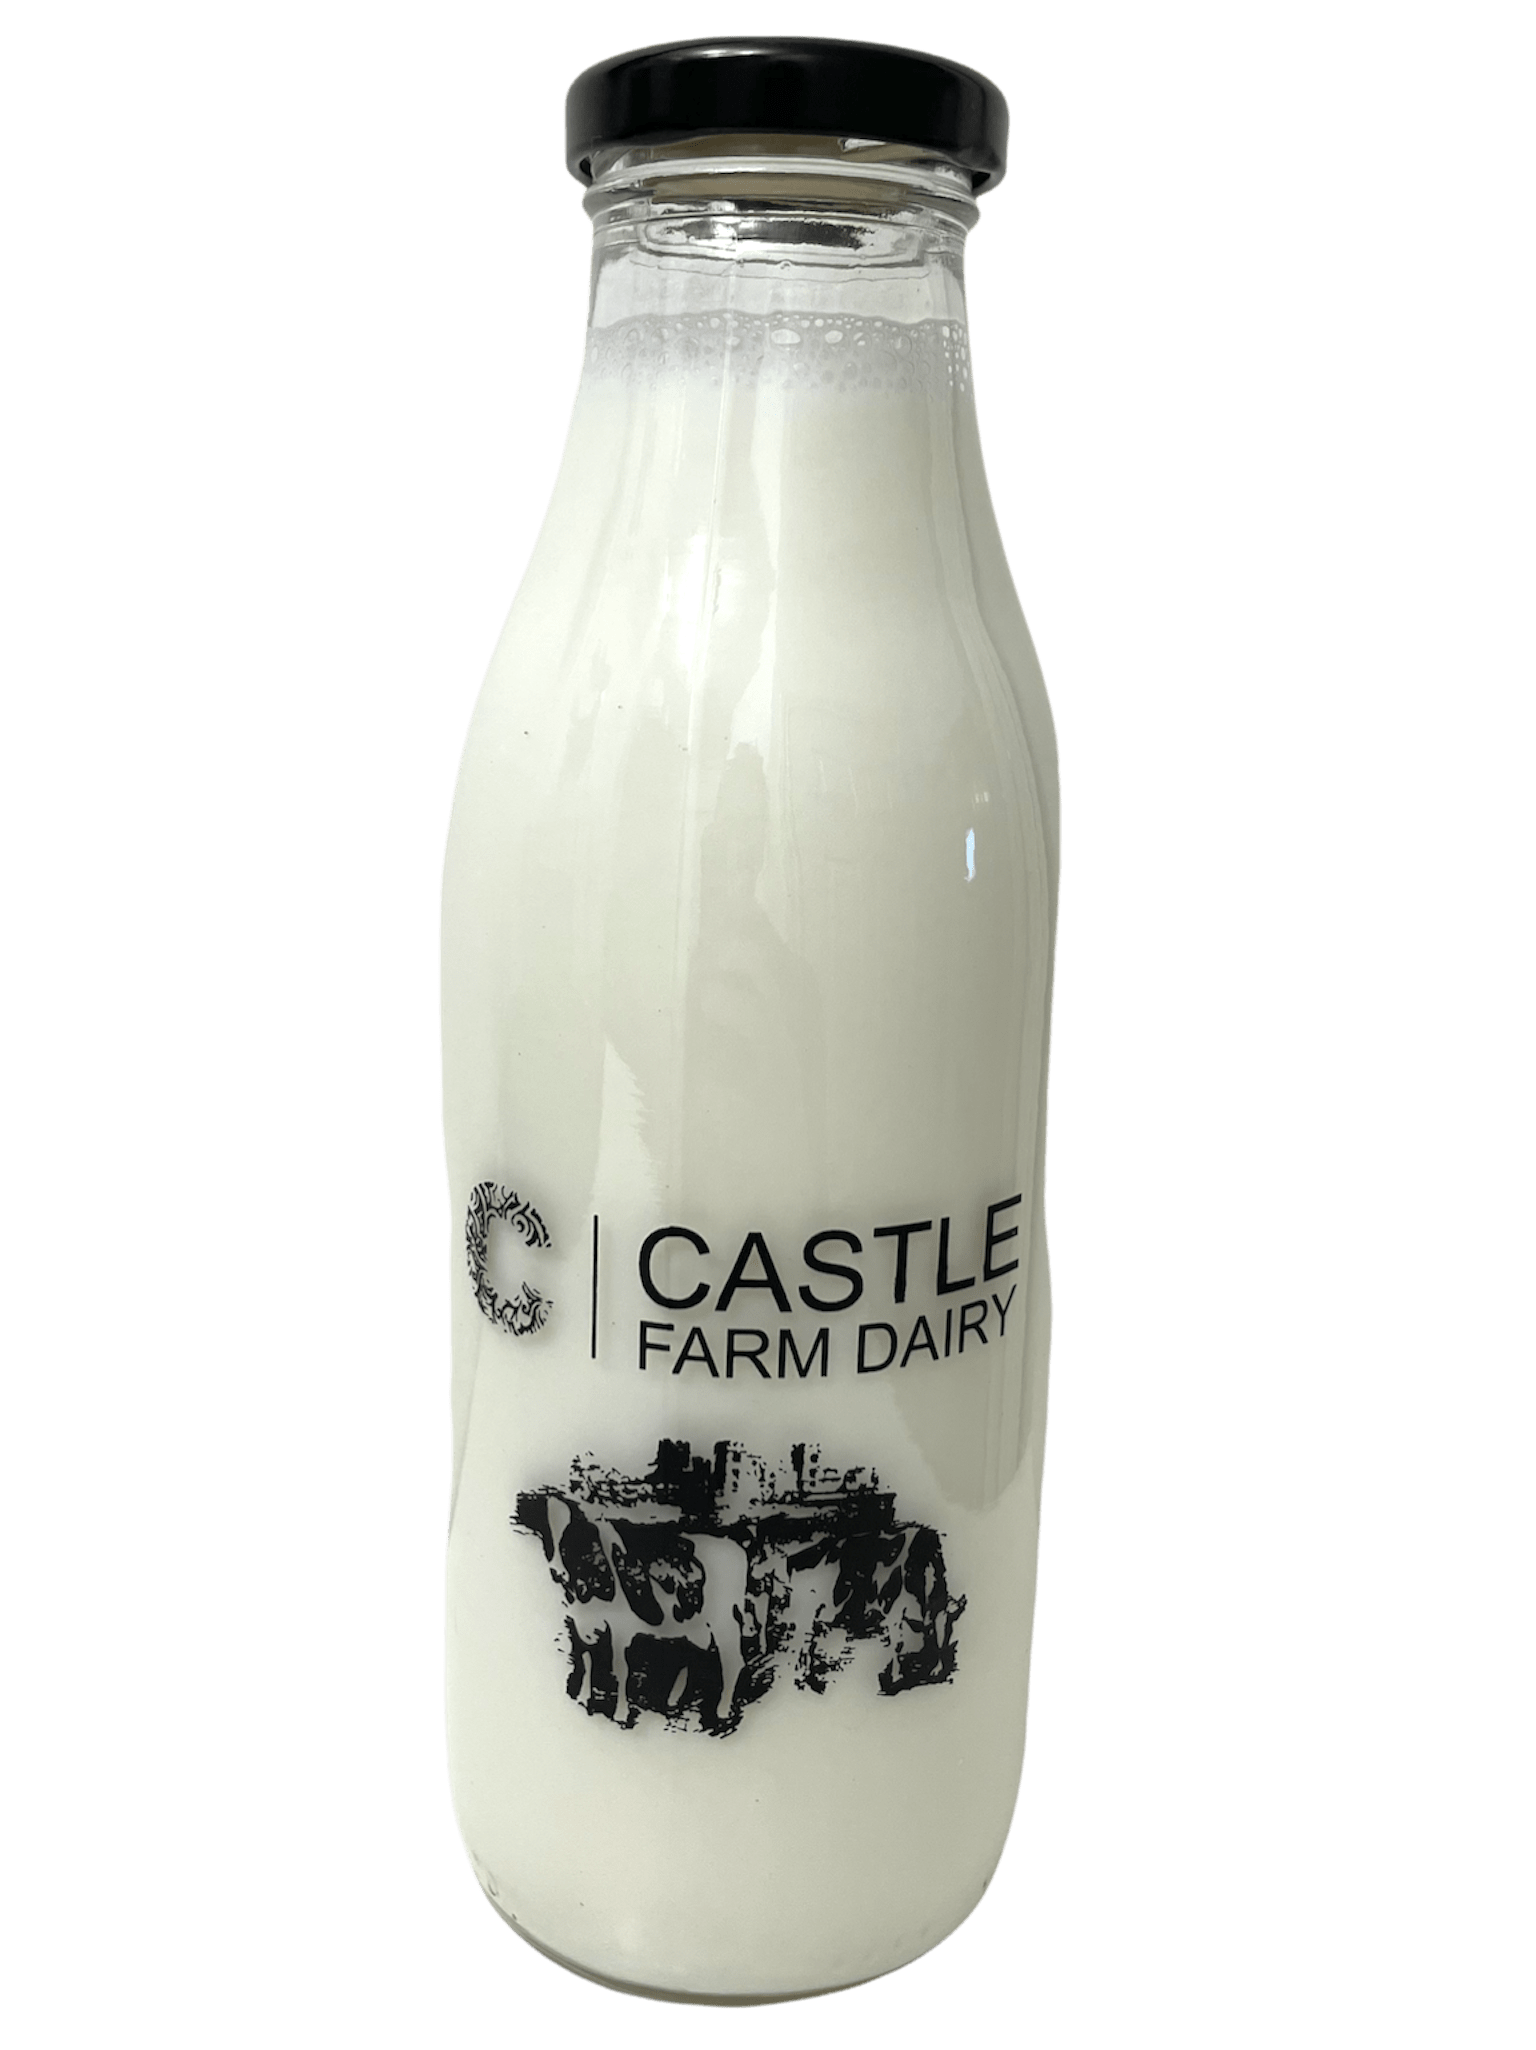 CastleFarmDairy - Kelis.info